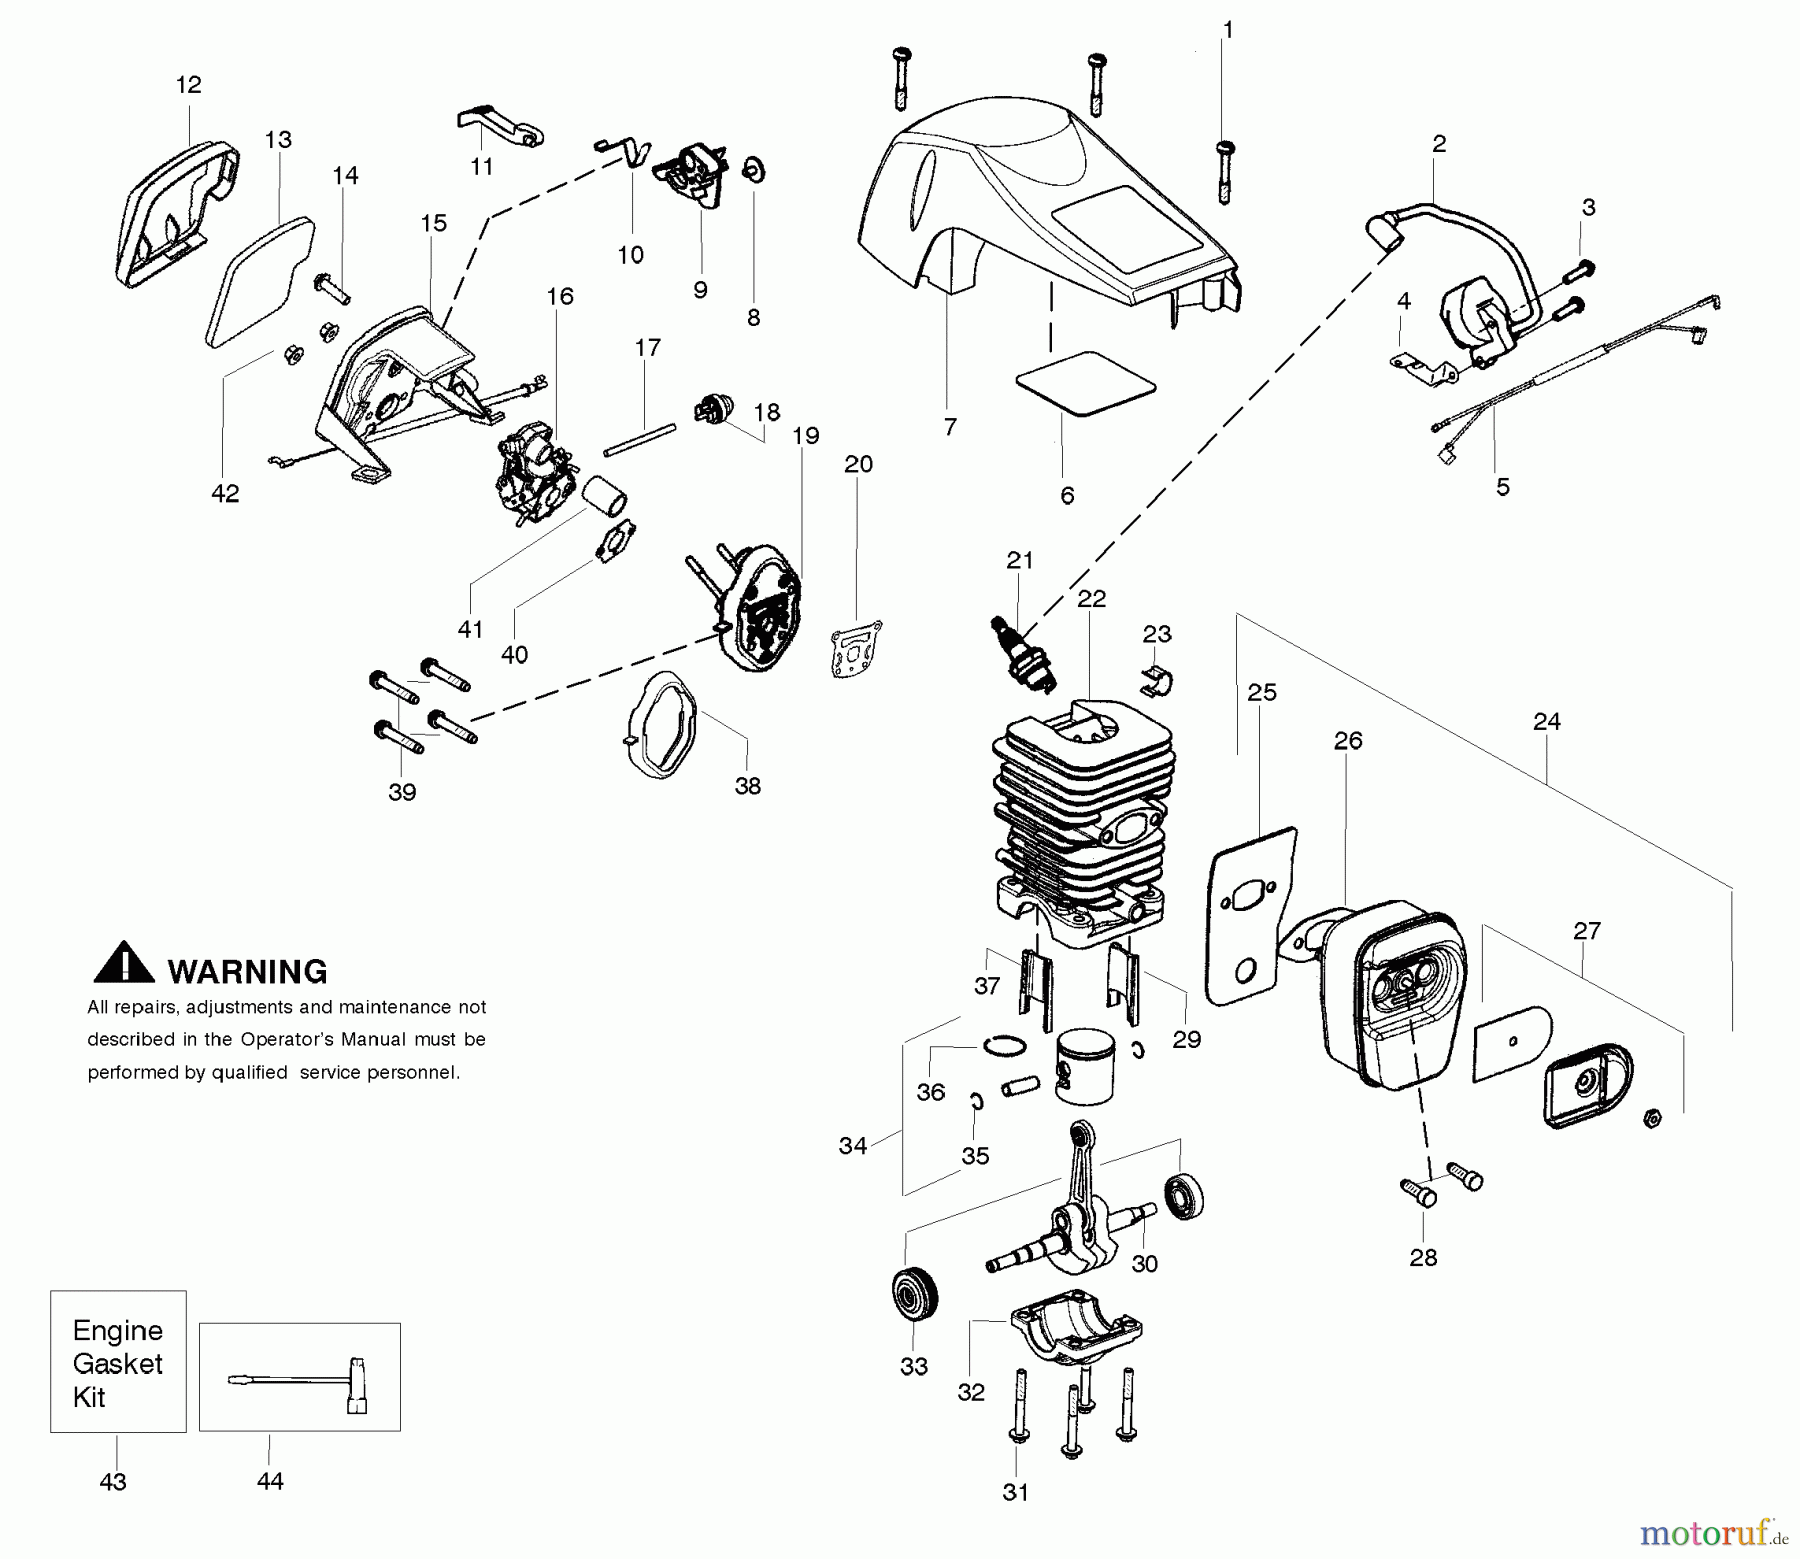  Poulan / Weed Eater Motorsägen SM4218AVX - Poulan Pro Chainsaw Engine Assembly